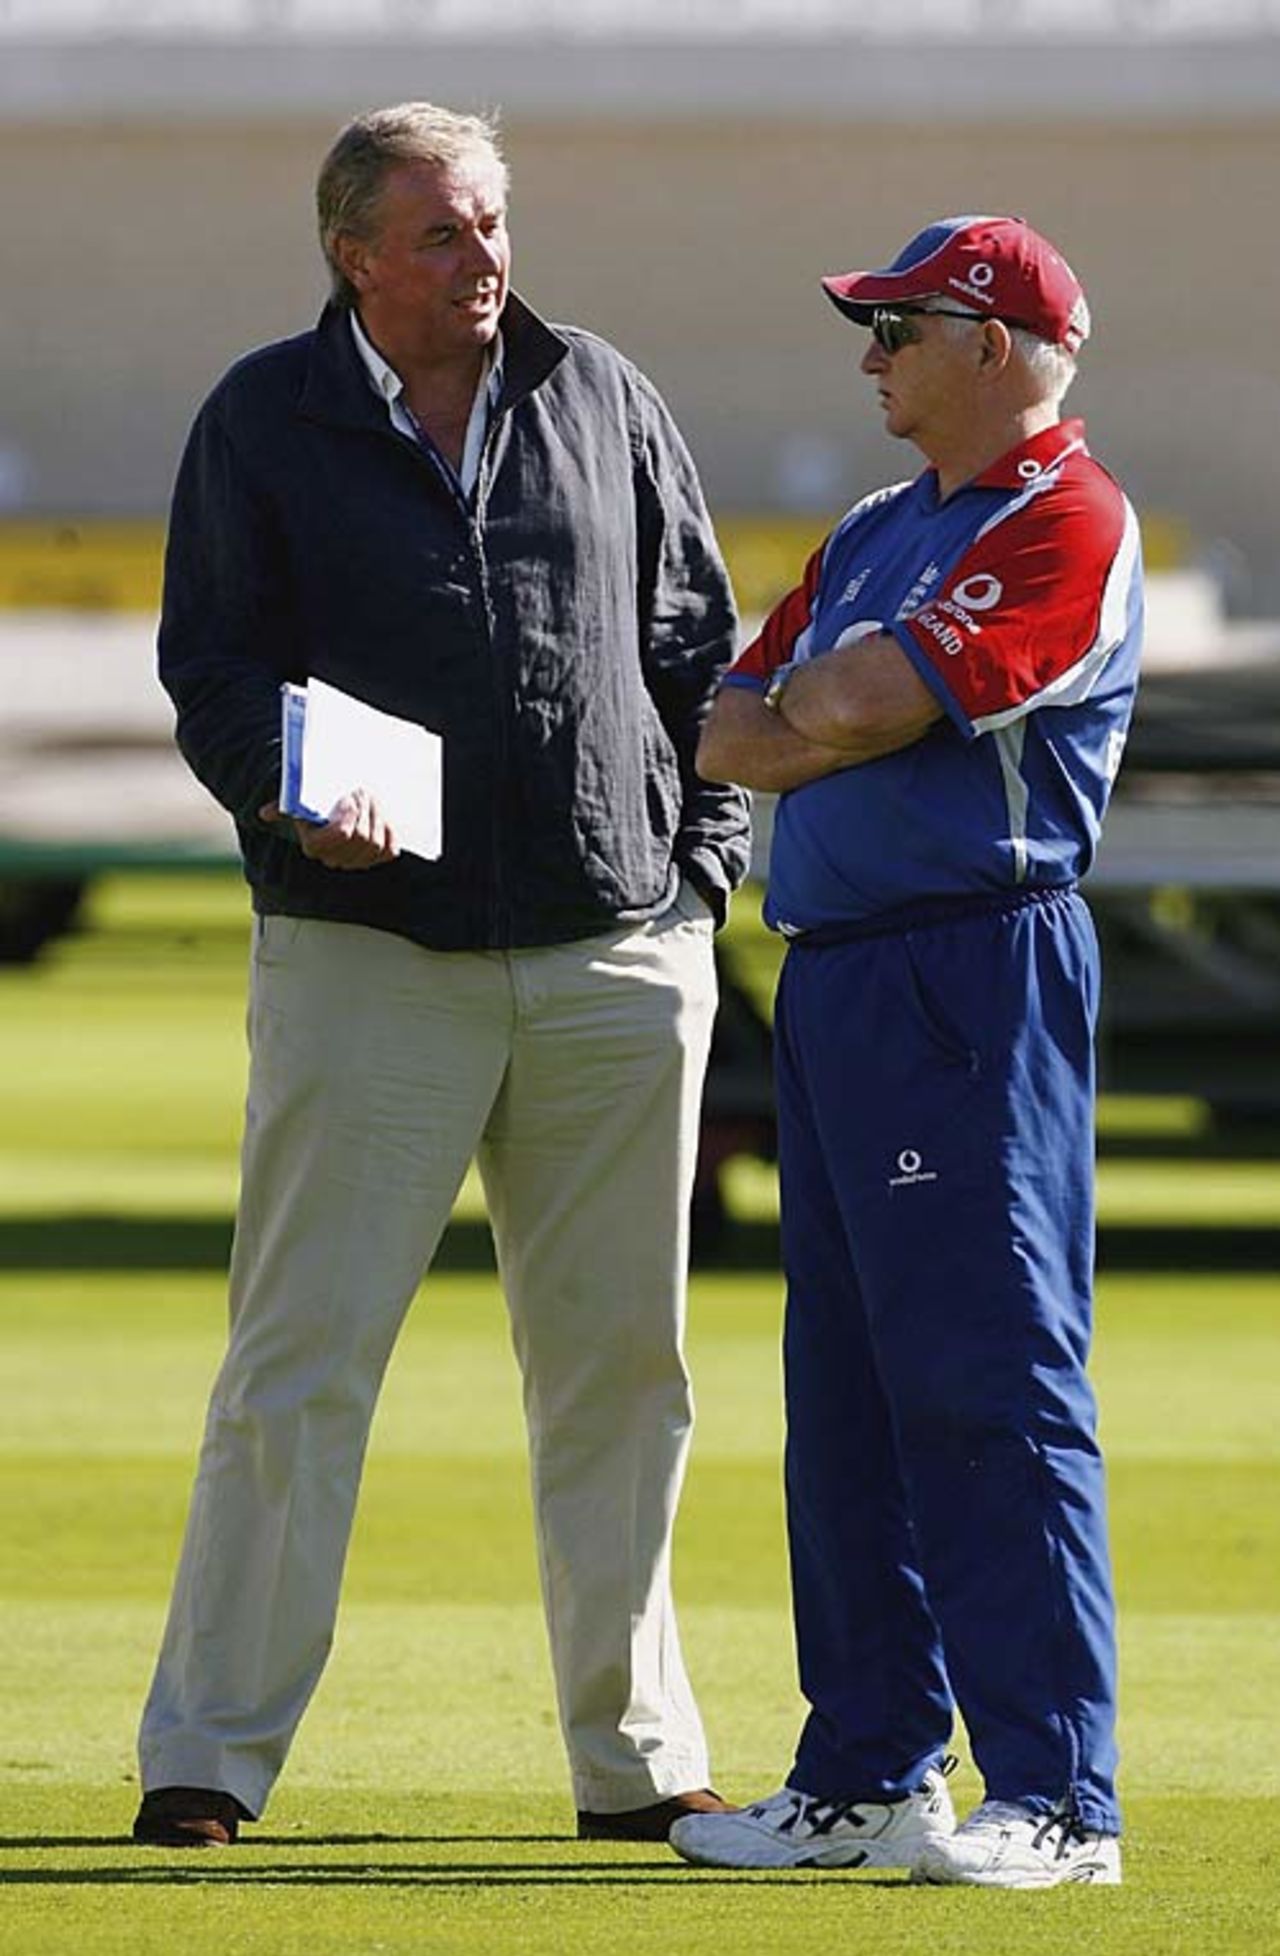 David Graveney and Duncan Fletcher discuss tactics, Trent Bridge, September 7, 2006